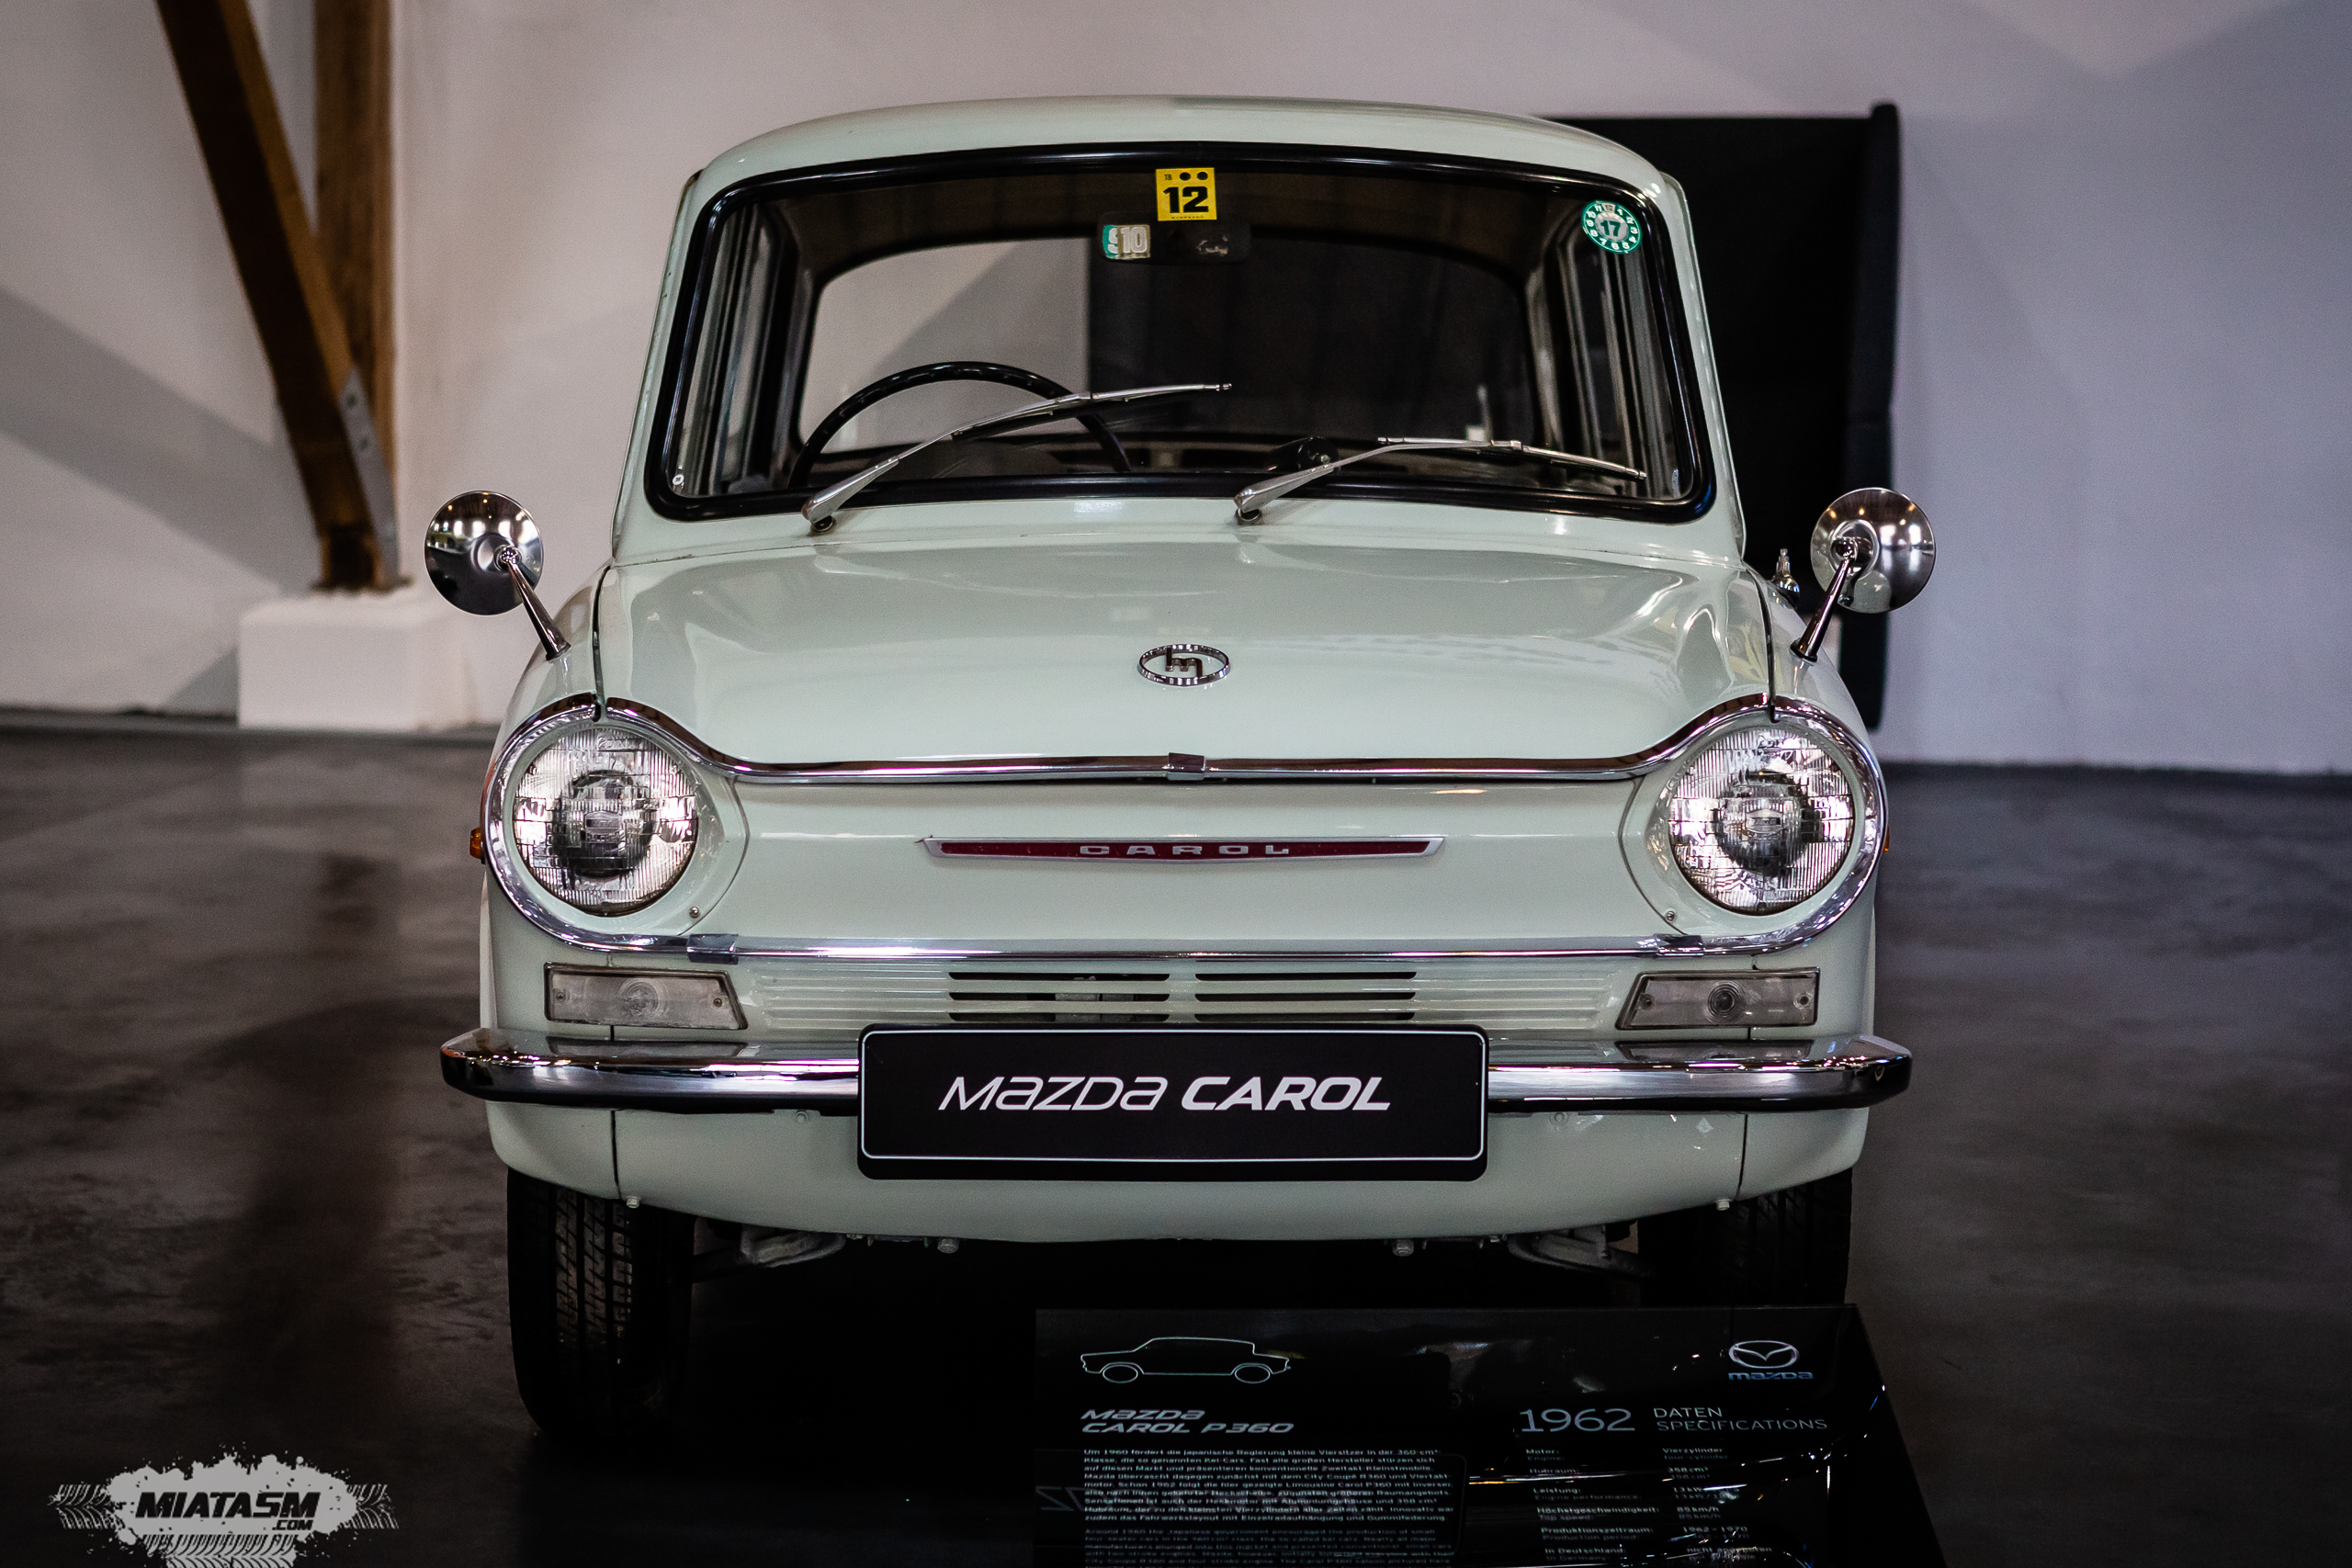 Mazda Carol Mazda Classic Automobile Museum Frey